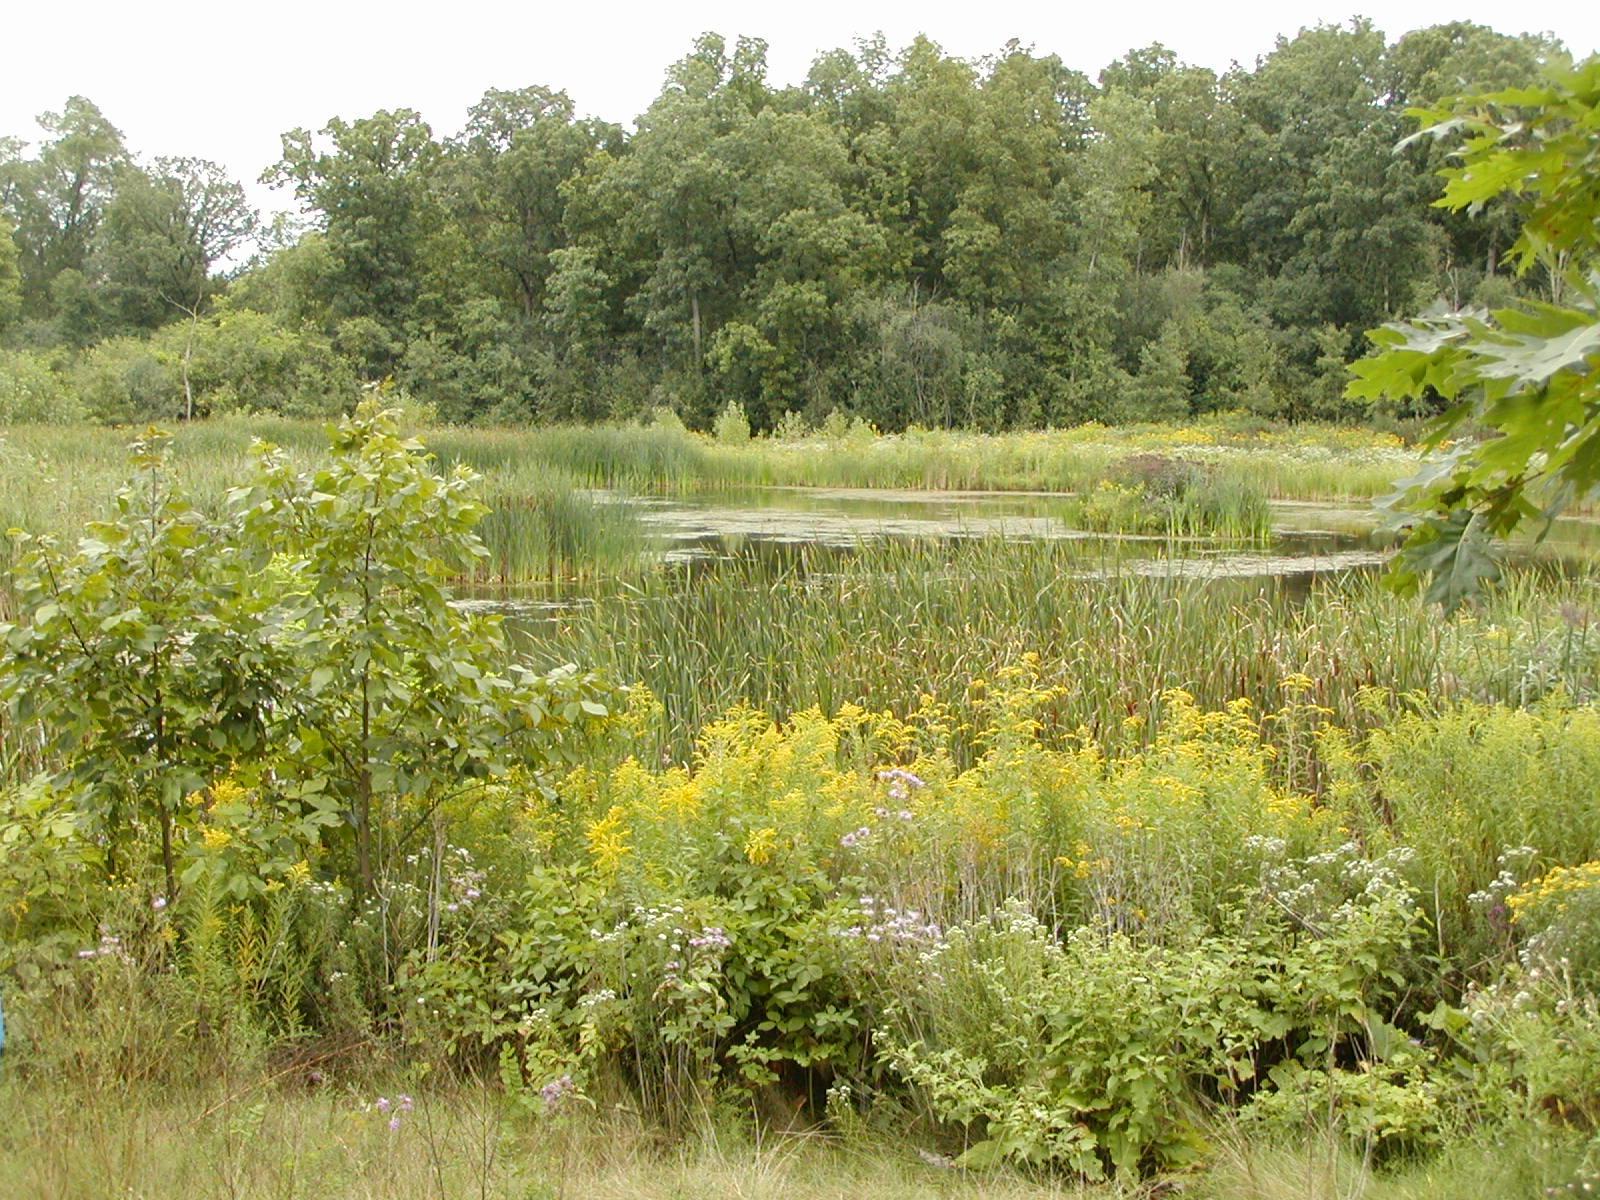 Native plants around retention pond